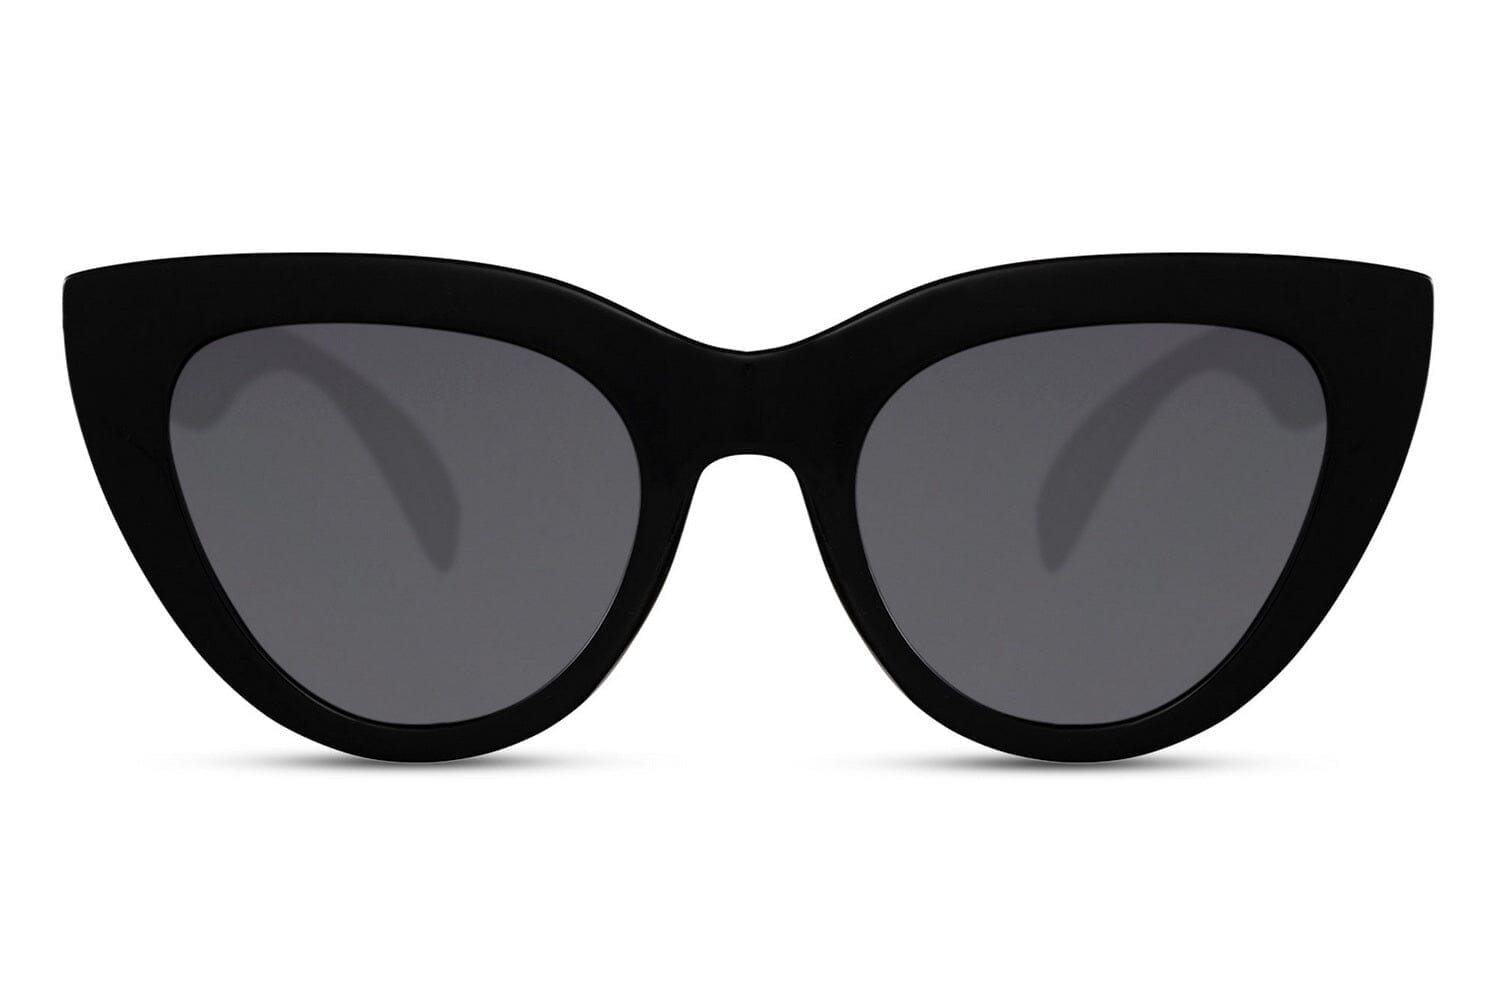 Black cat eye sunglasses. Black acetate frames. UV400 protected.